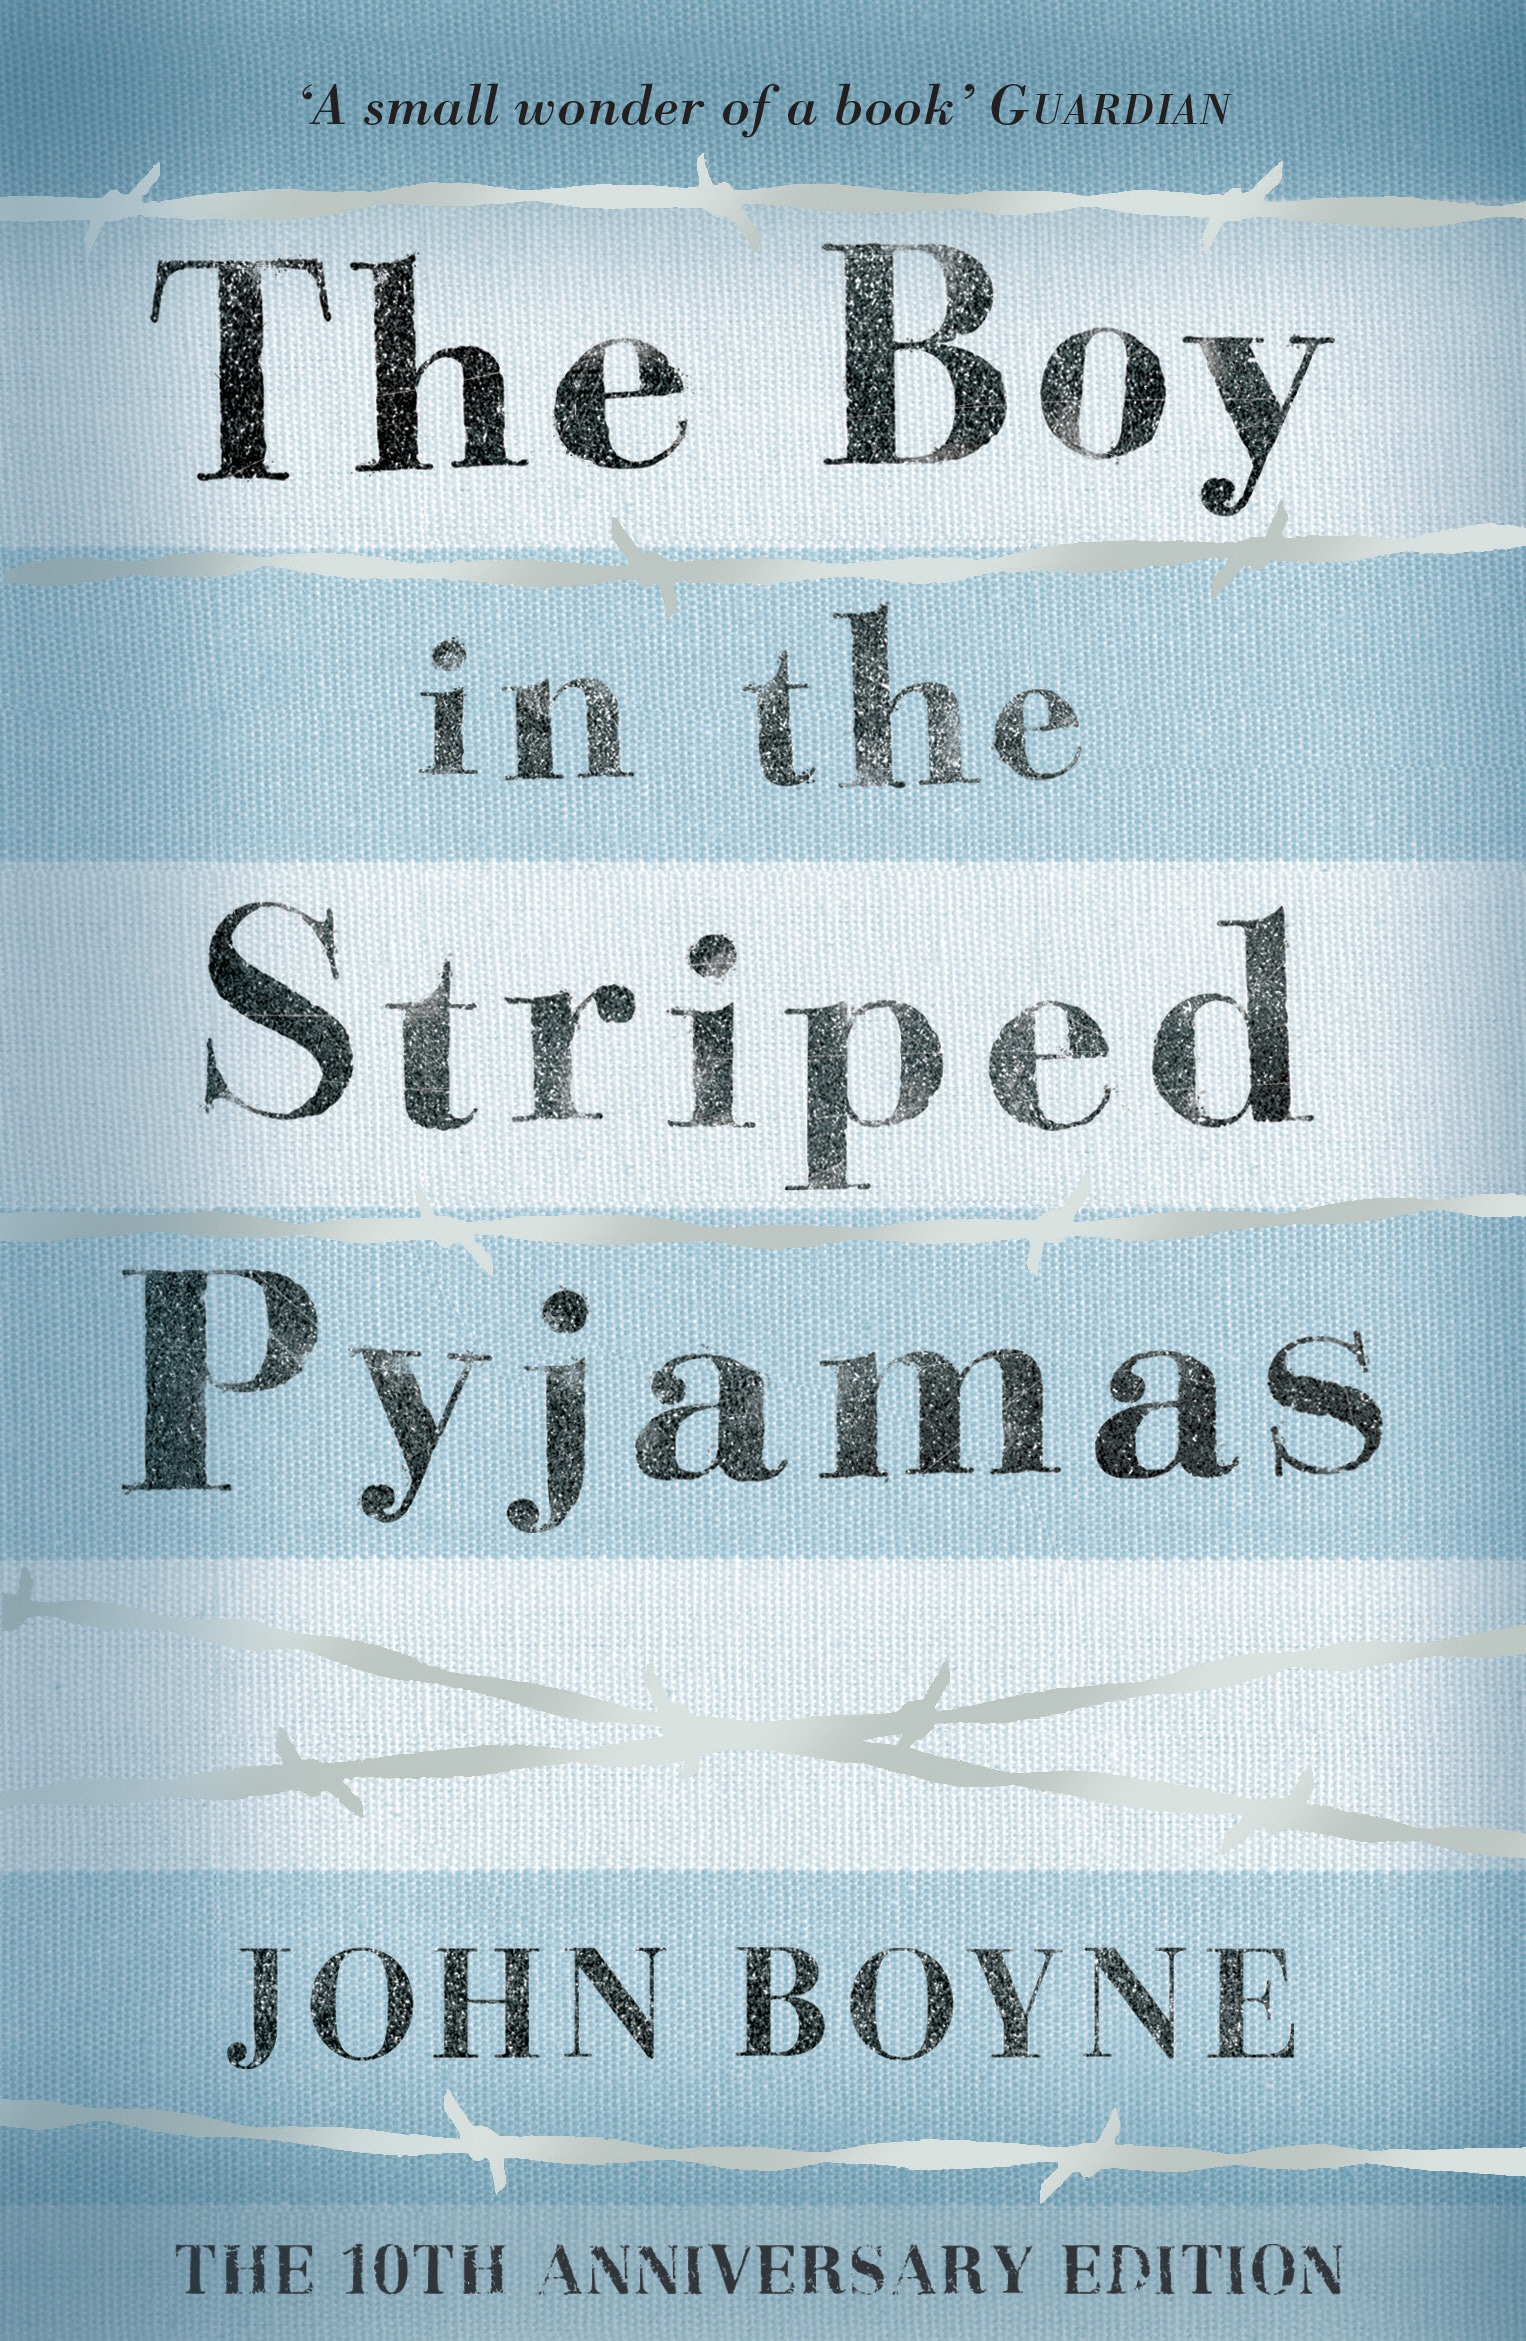 Book “The Boy in the Striped Pyjamas” by John Boyne — February 13, 2014